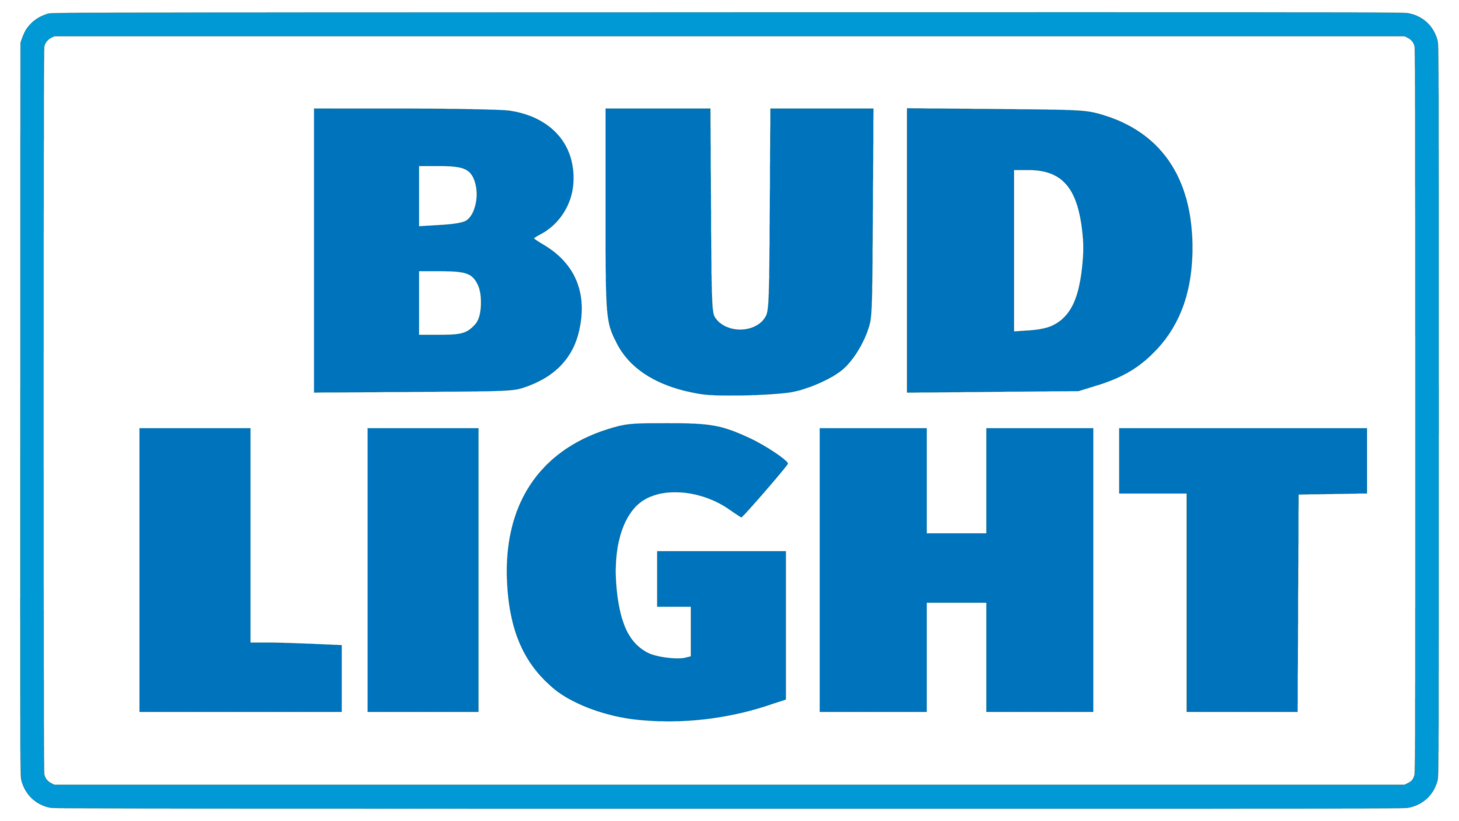 Bud light sign 2016 present